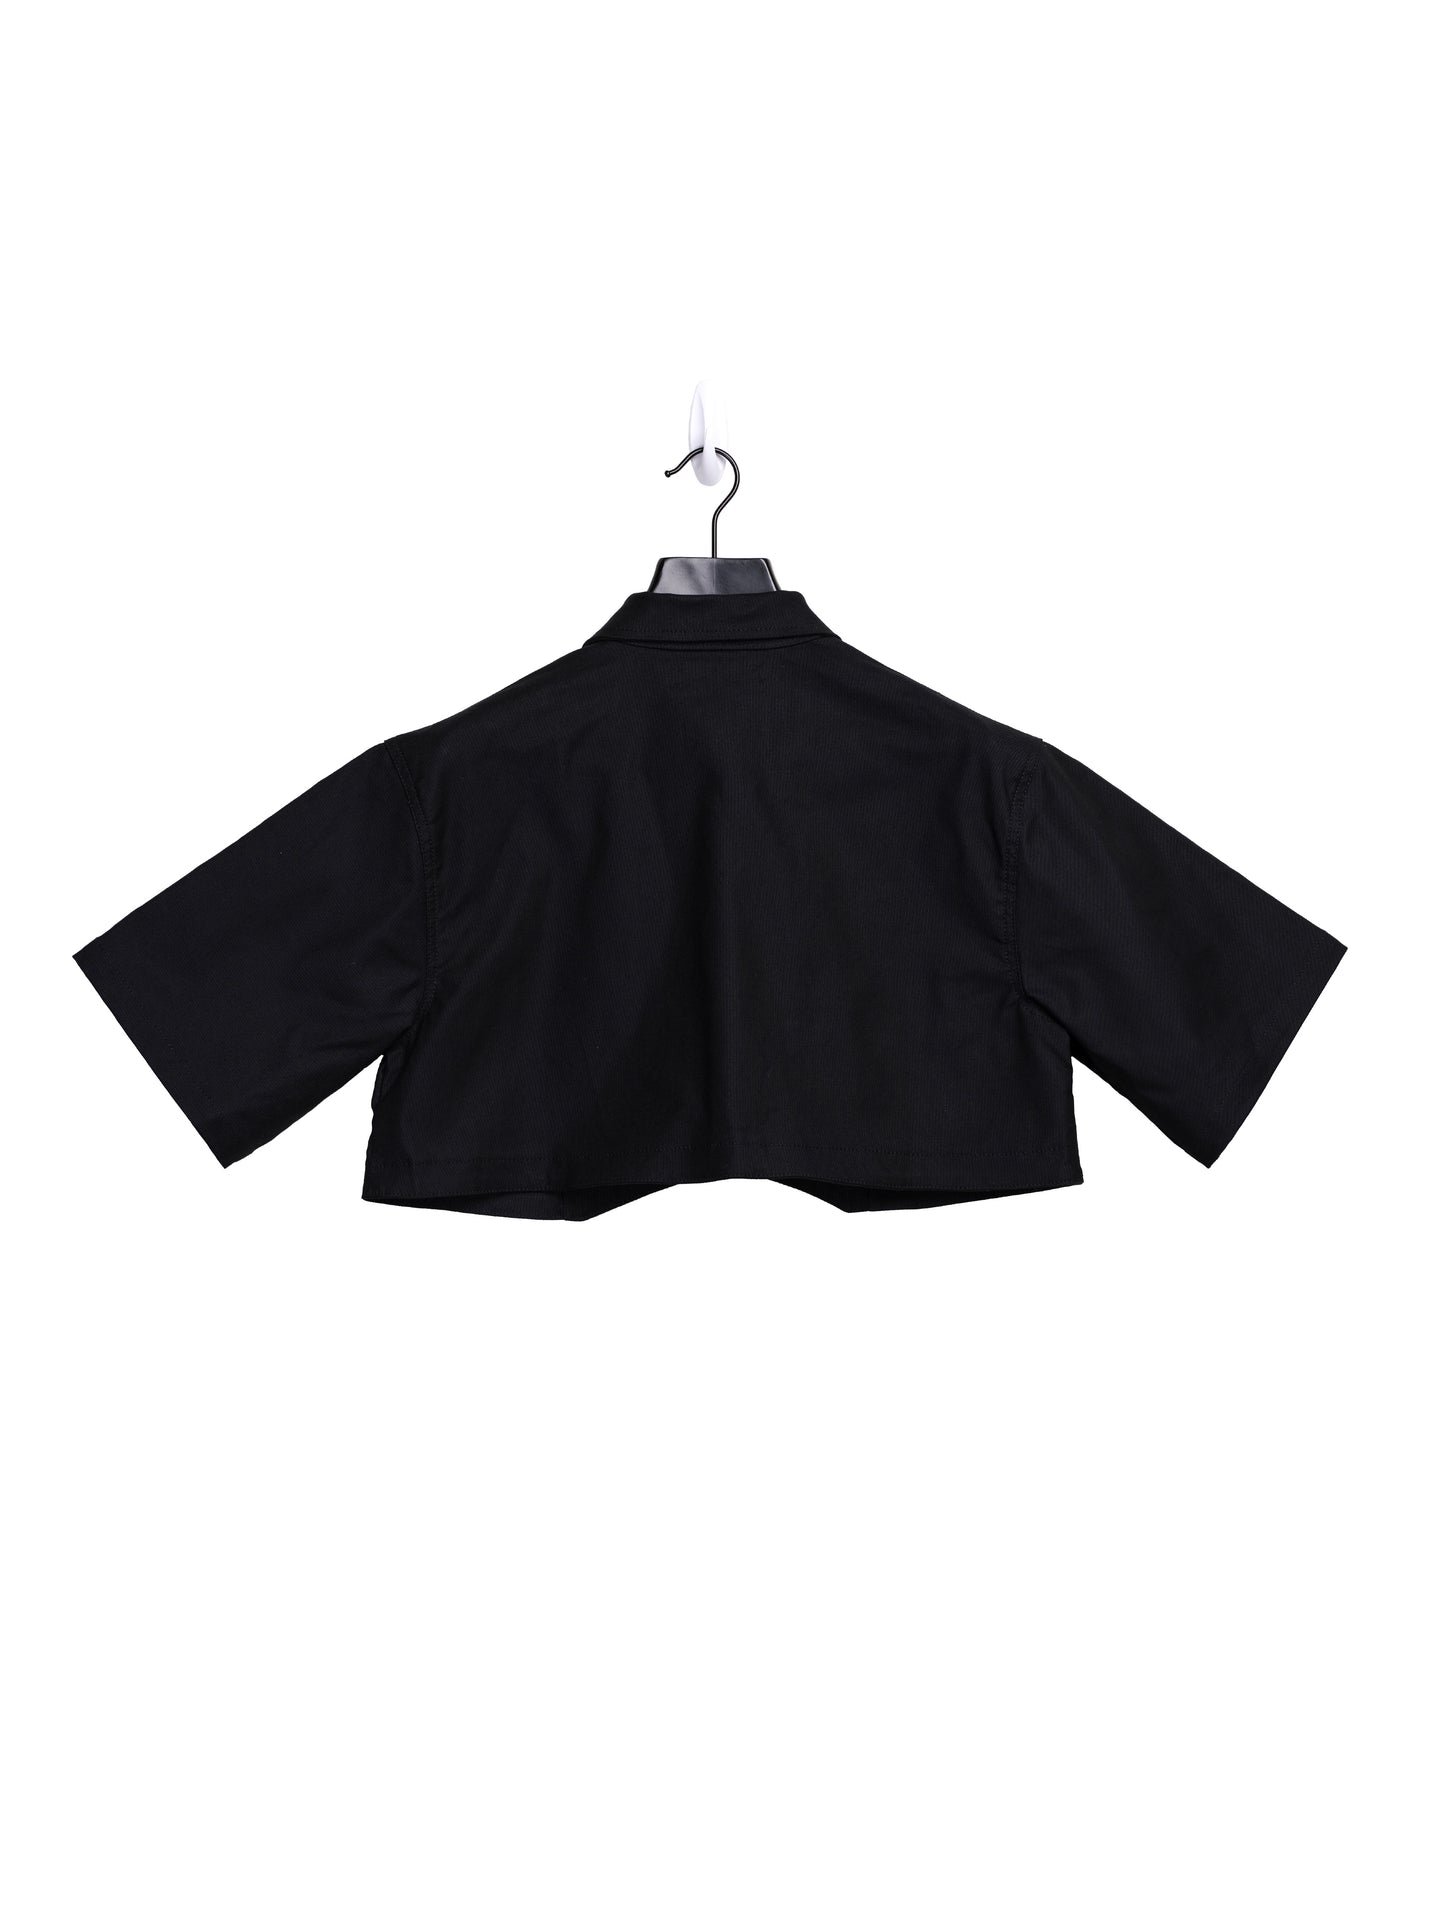 Gorilla Crop Jacket (Black)